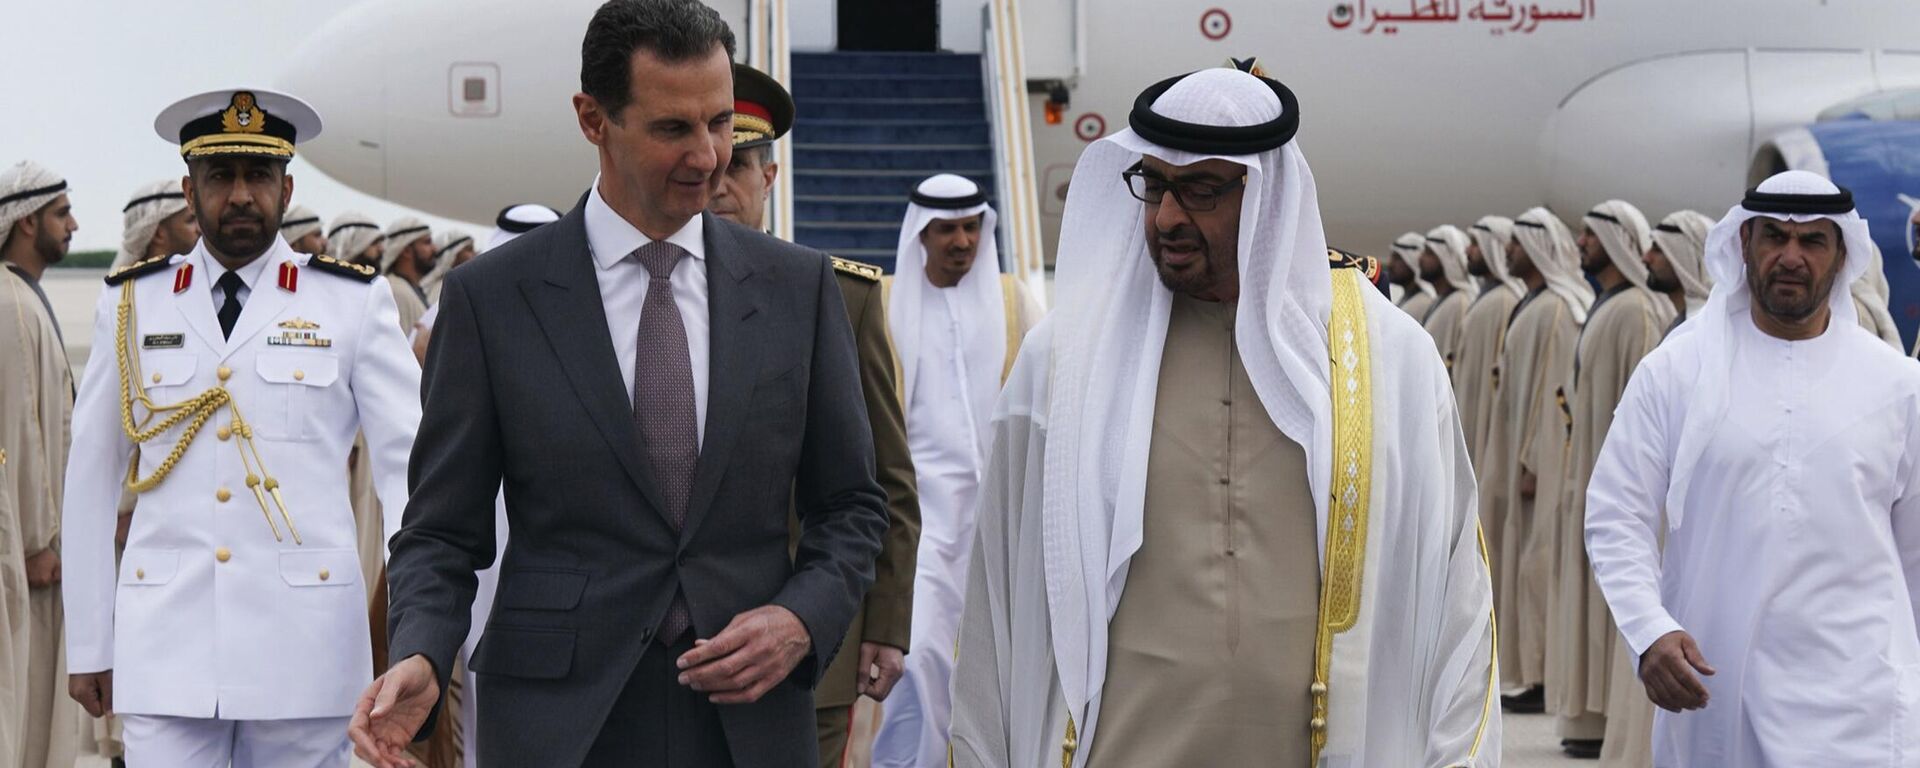 El ministro de Exteriores saudí llega a Siria para reunirse con Asad |  Fotos - 18.04.2023, Sputnik Mundo